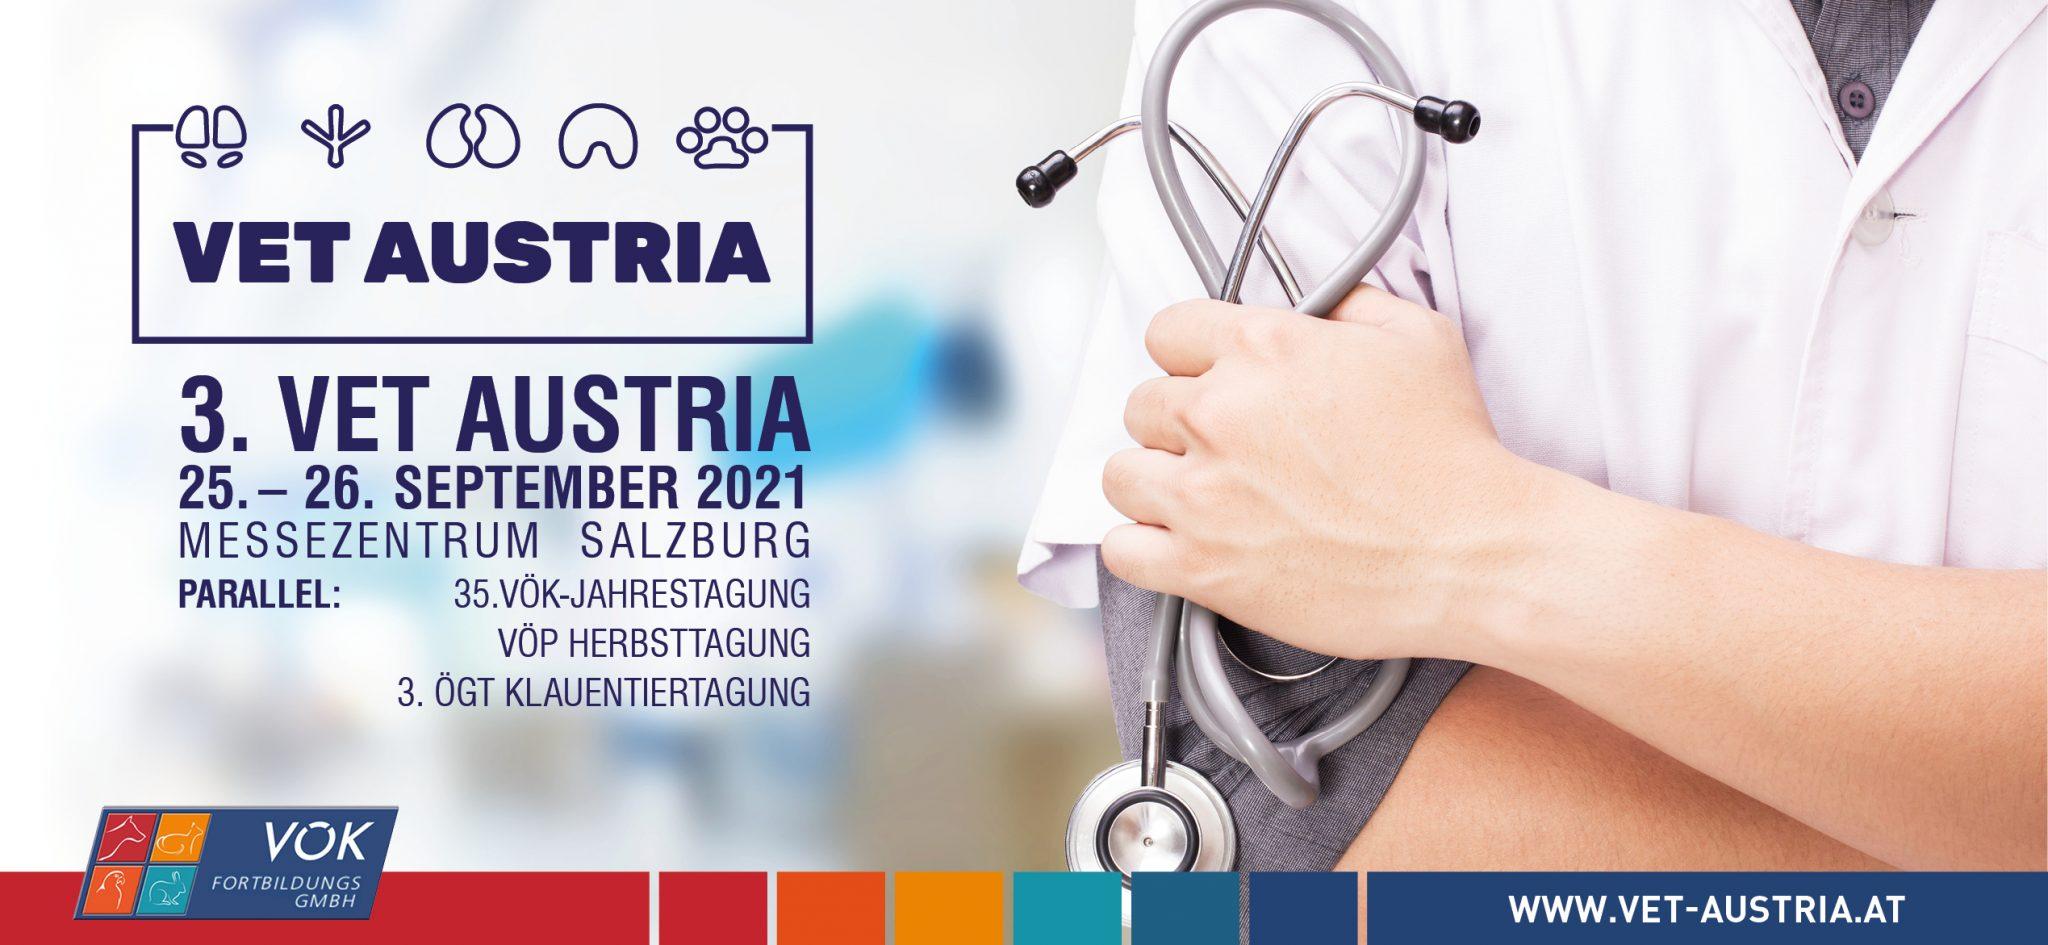 3. Vet Austria vom 25. bis 26. September 2021